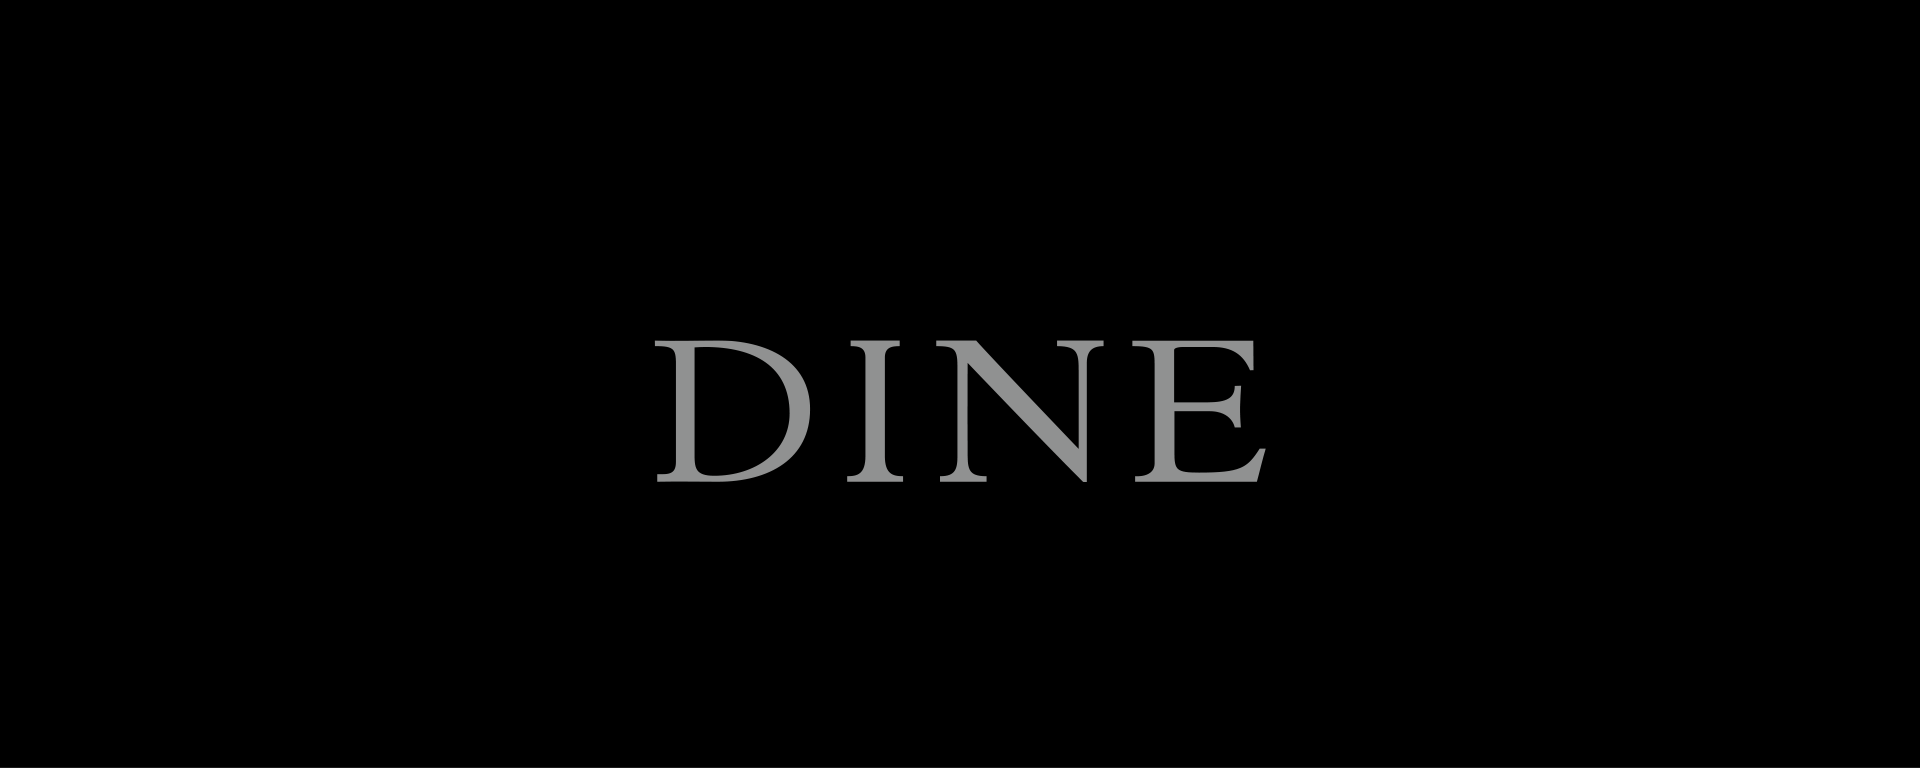 Dine - Header Banner